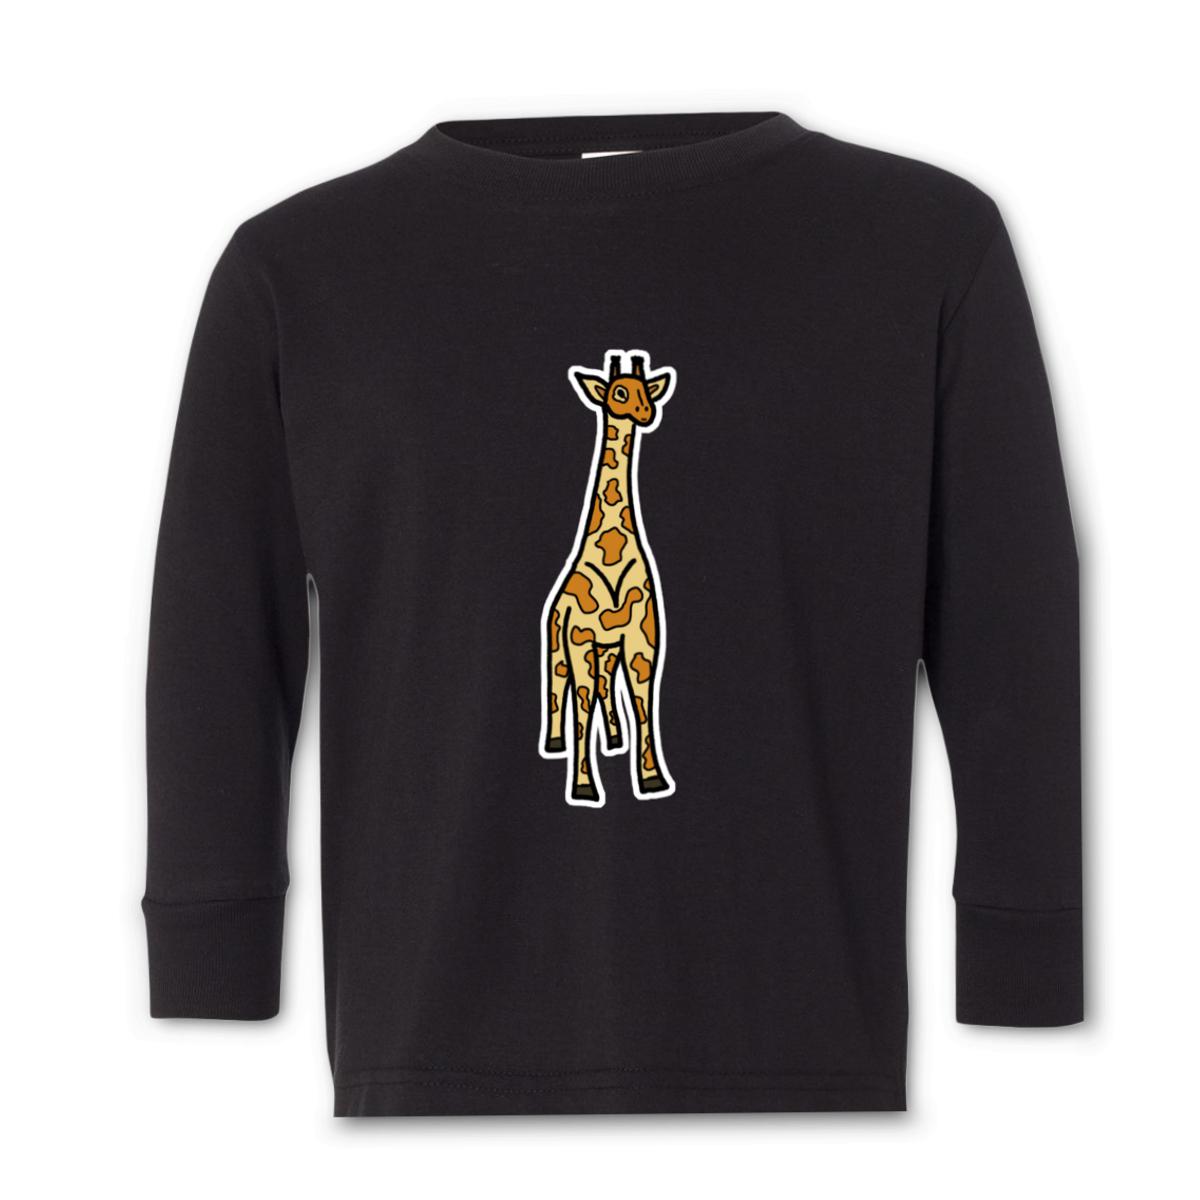 Toy Giraffe Toddler Long Sleeve Tee 2T black